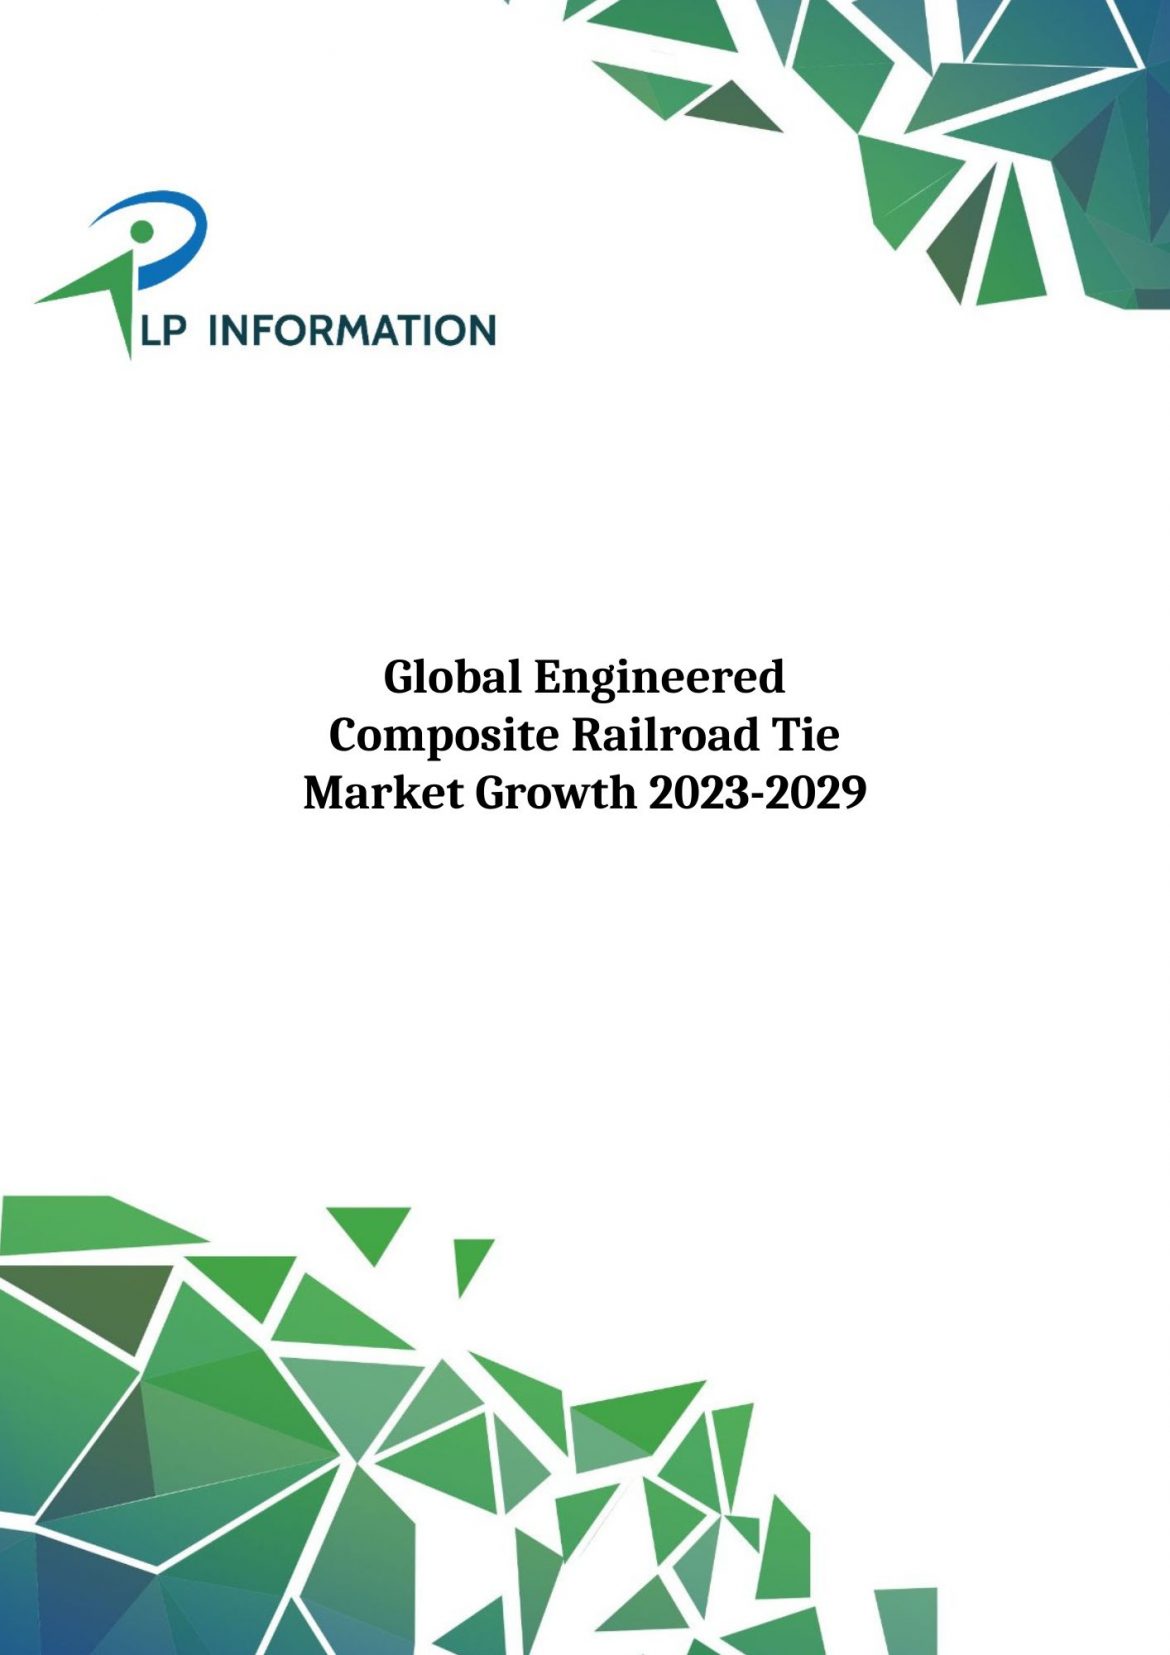 Global Engineered Composite Railroad Tie Market Growth 2023-2029